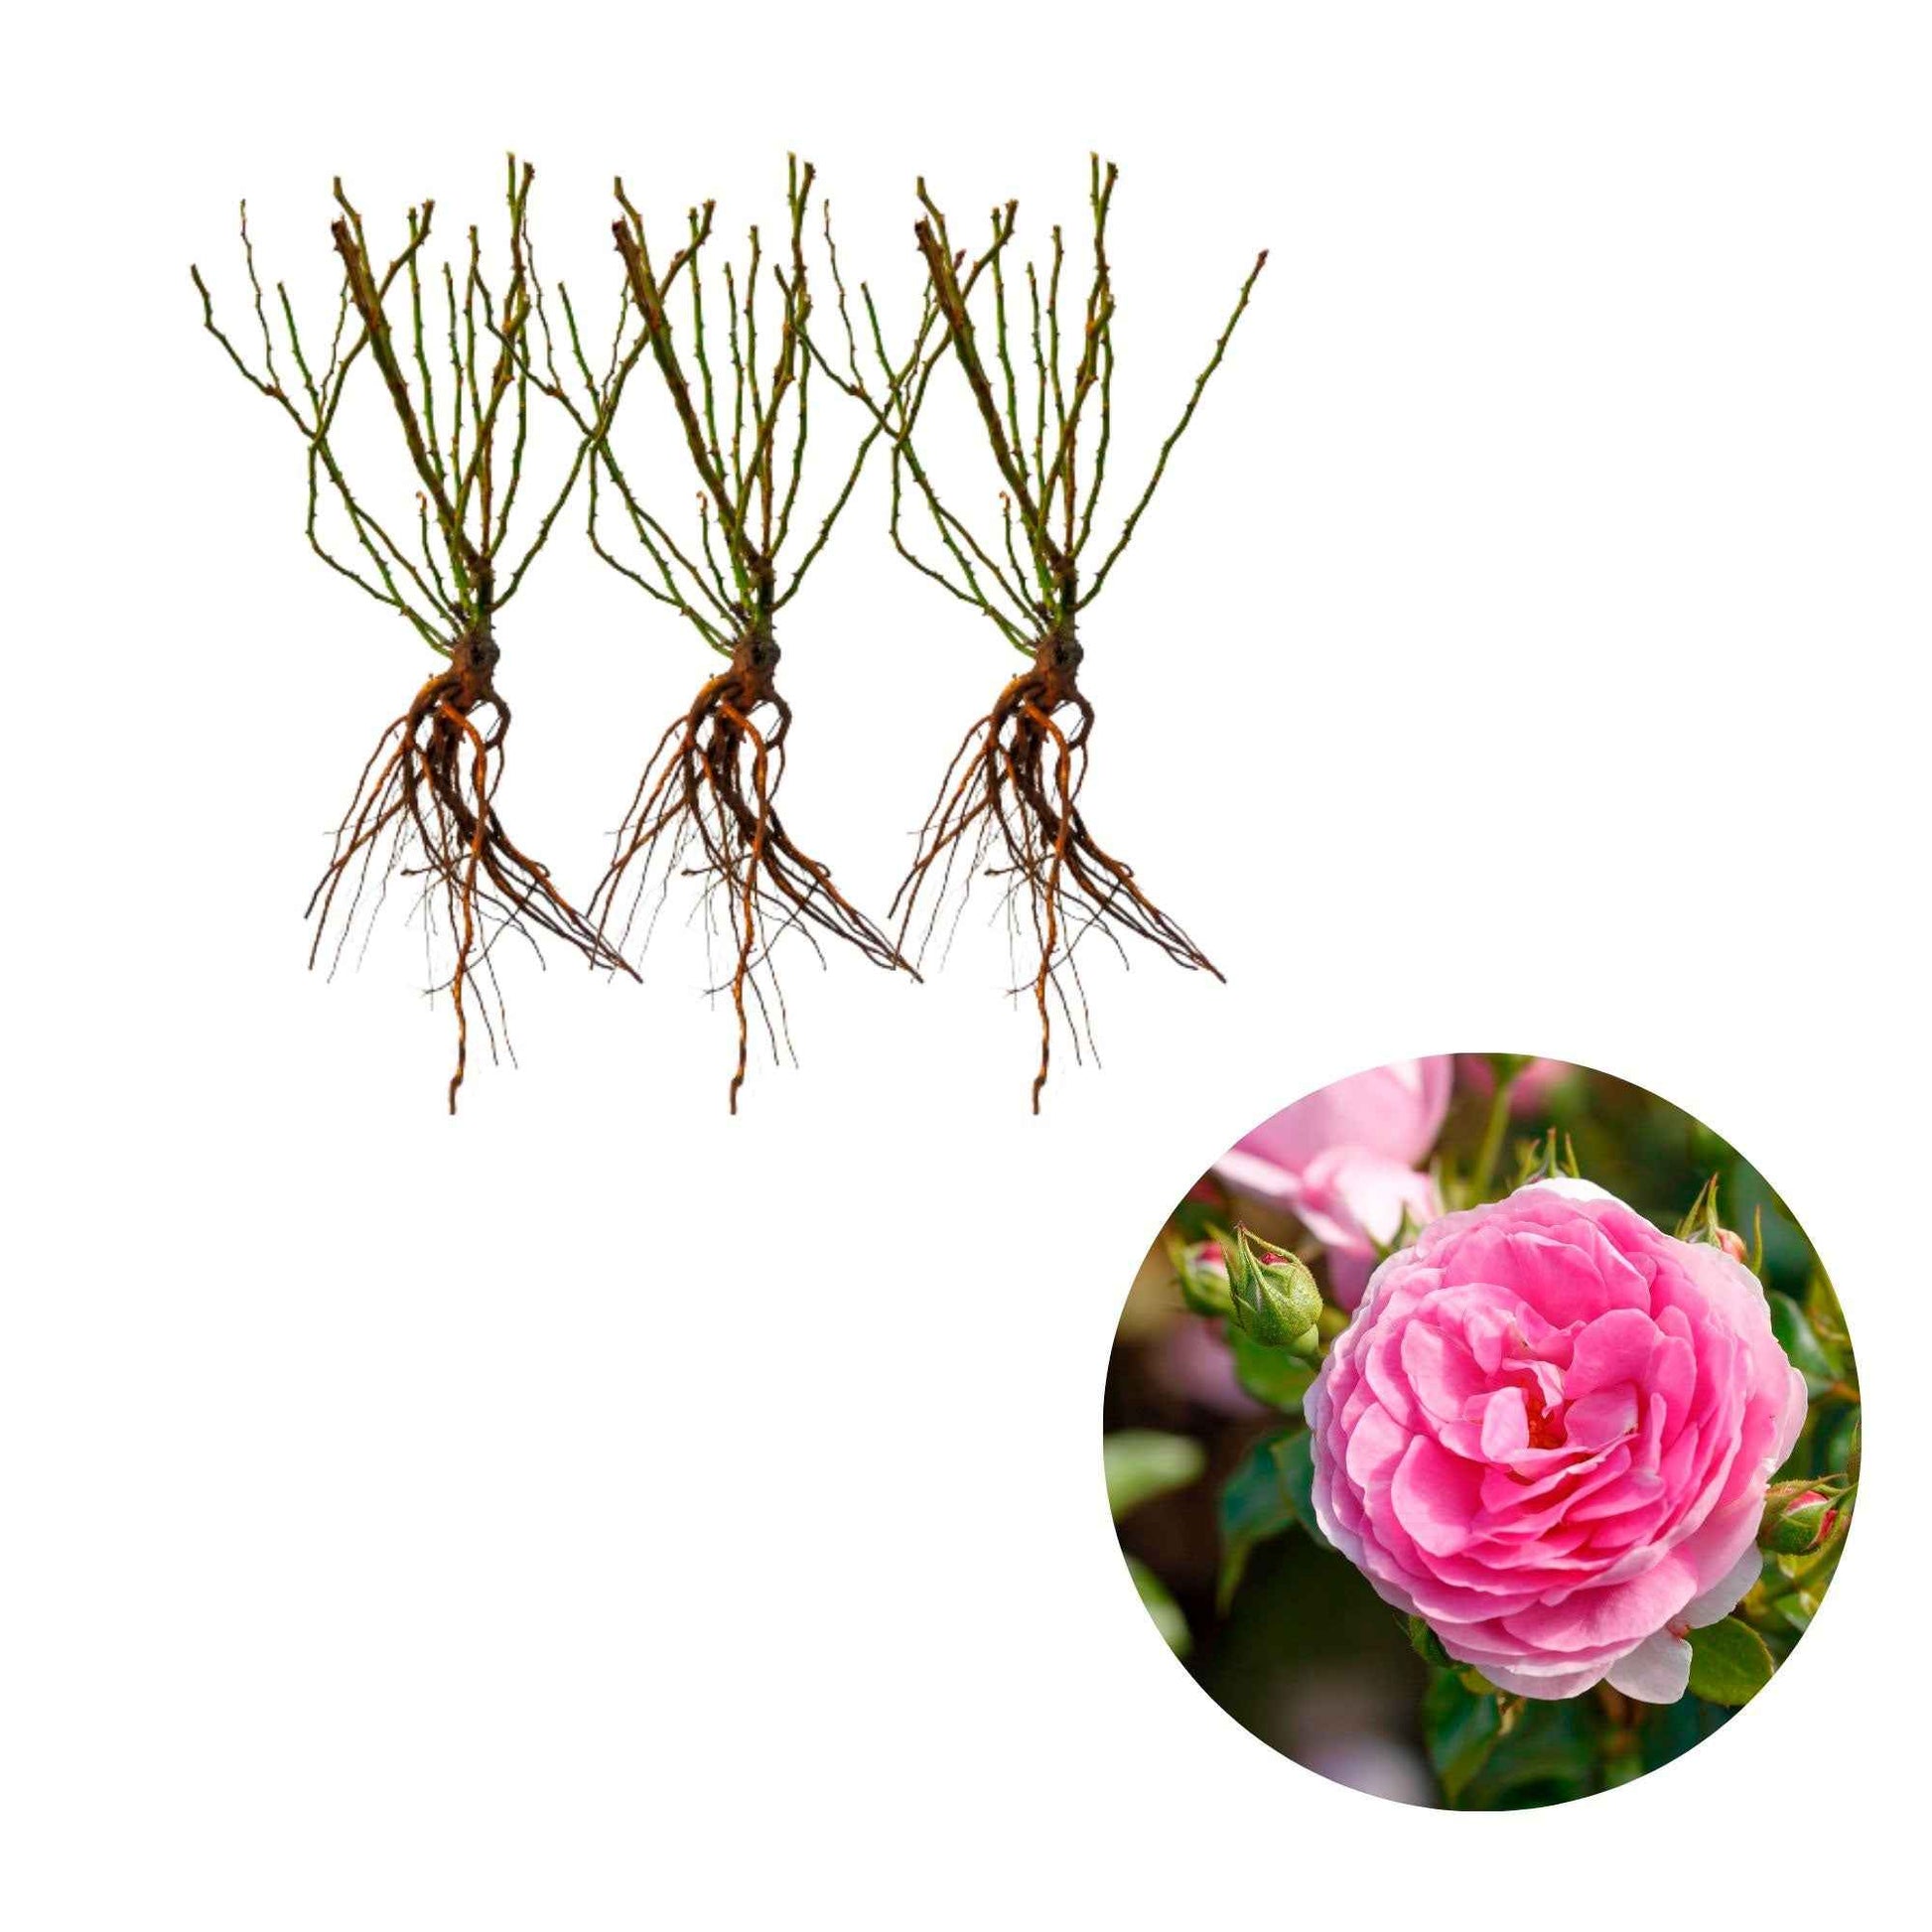 3x Klimroos Rosa Ozeana ® Paars - Bare rooted - Winterhard - Klimrozen